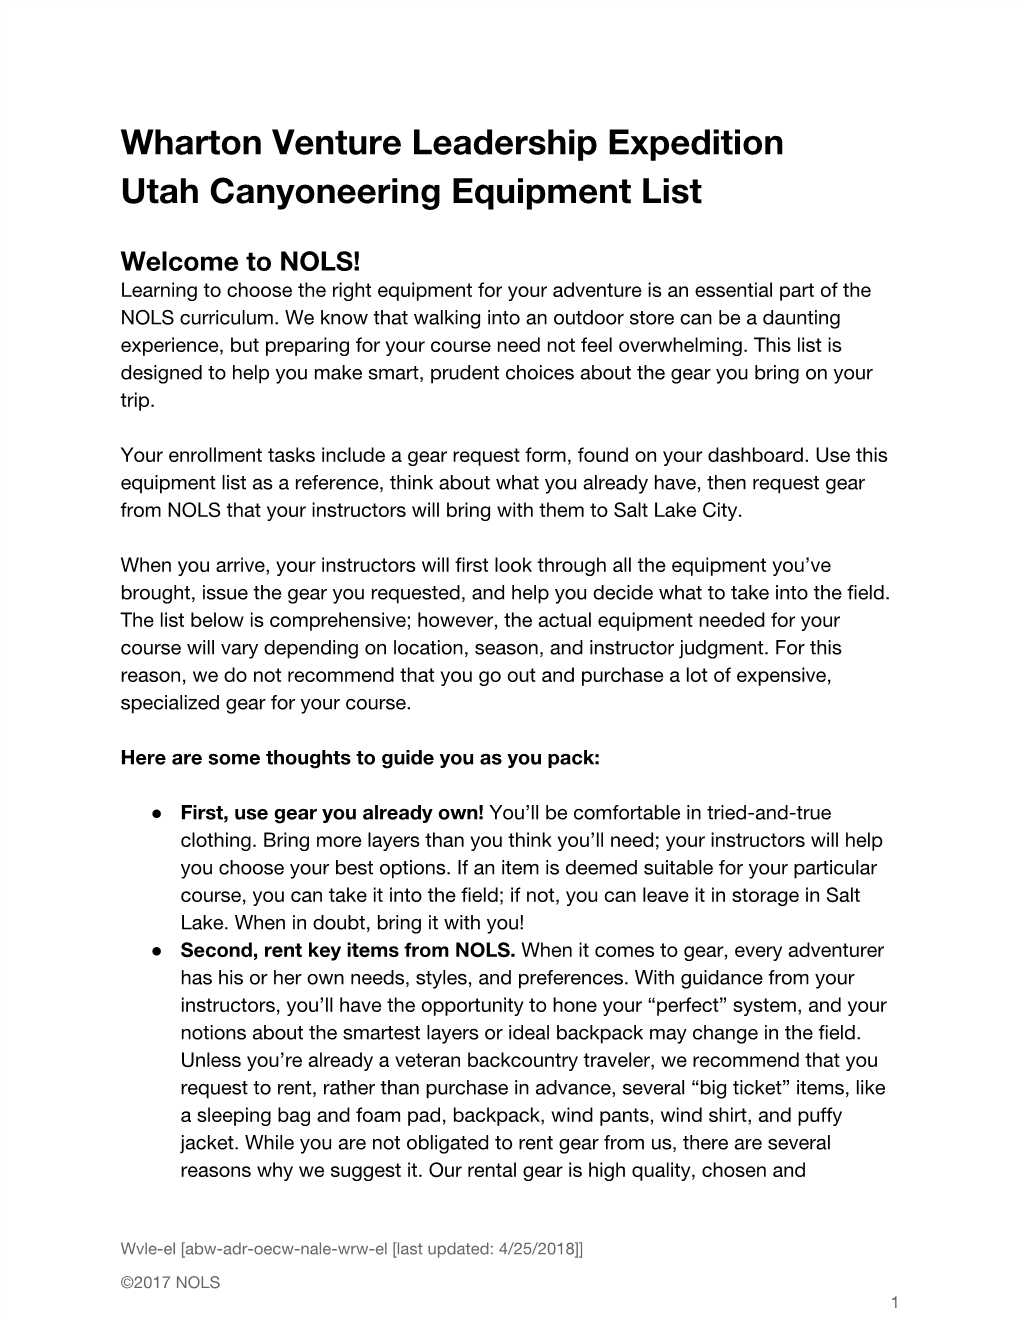 Wharton Venture Leadership Expedition Utah Canyoneering Equipment List ​